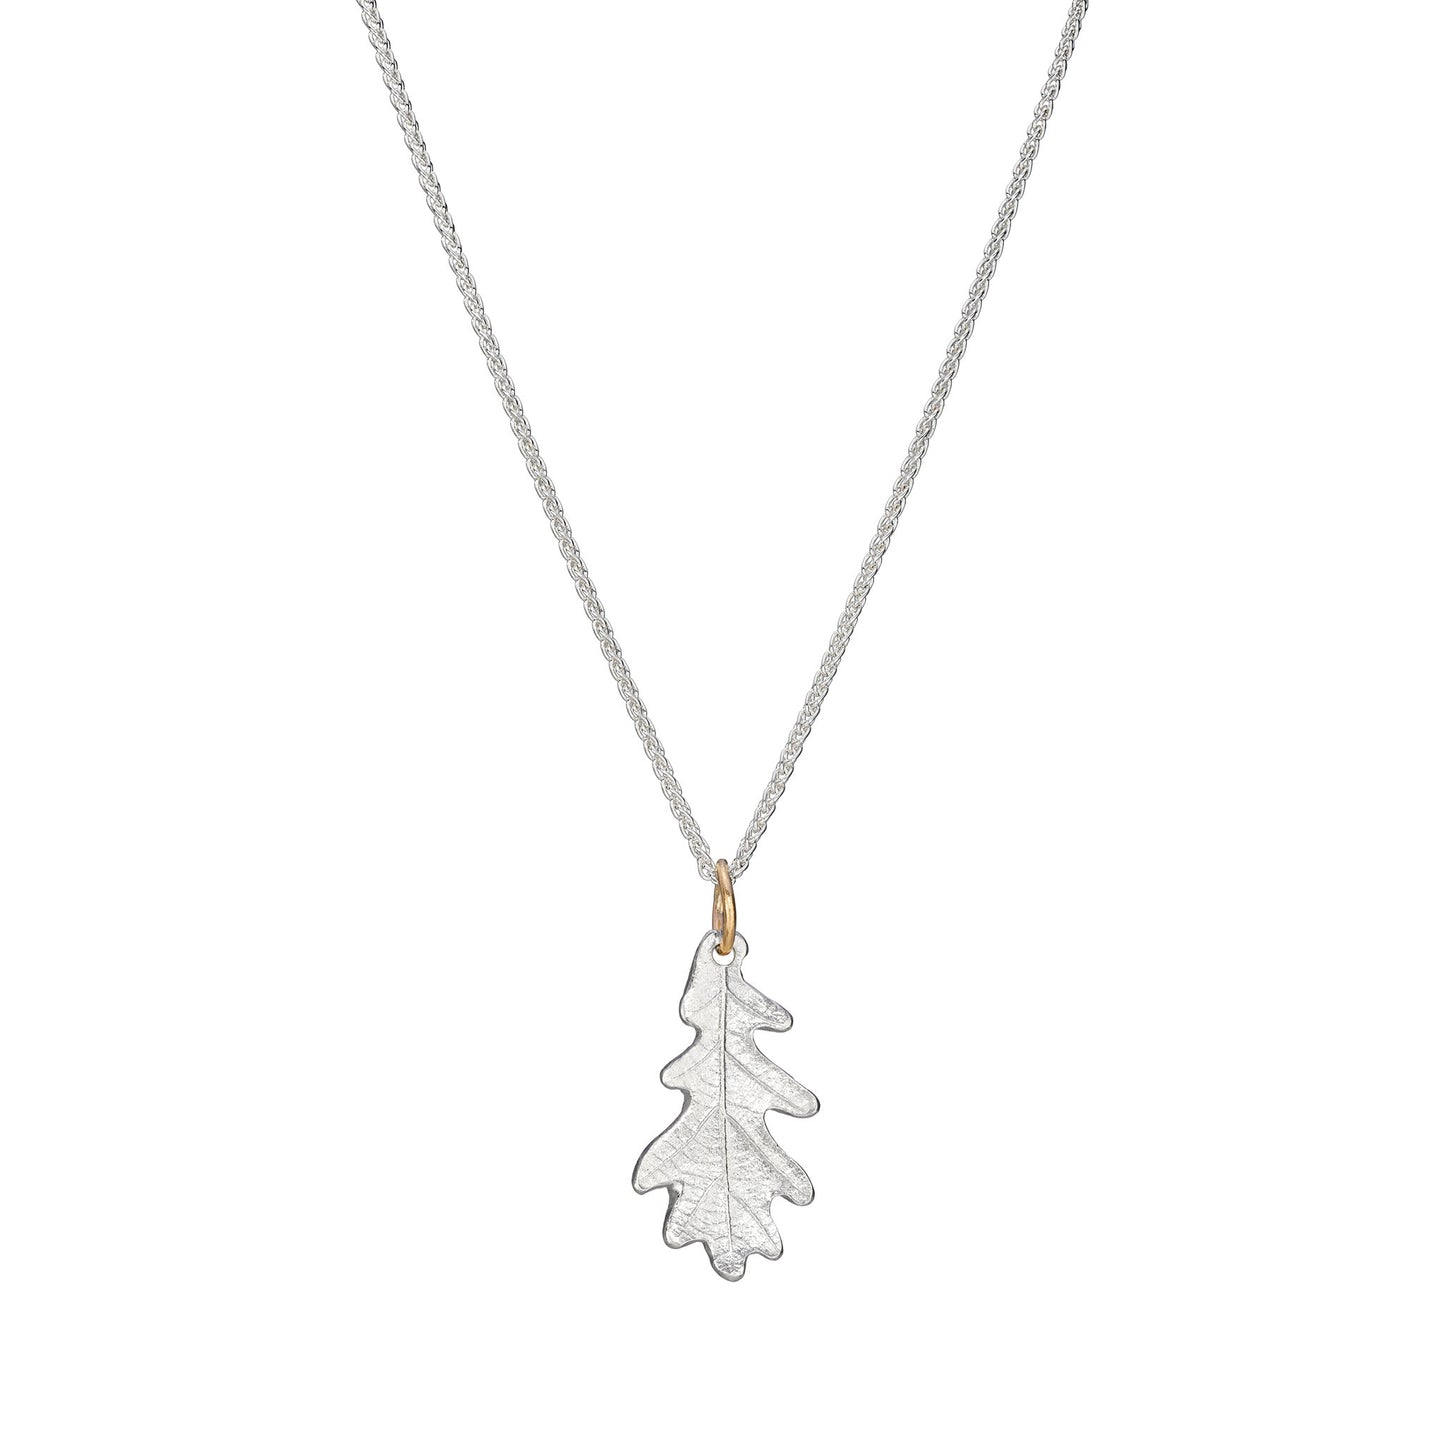 Oak leaf necklace with gold detail